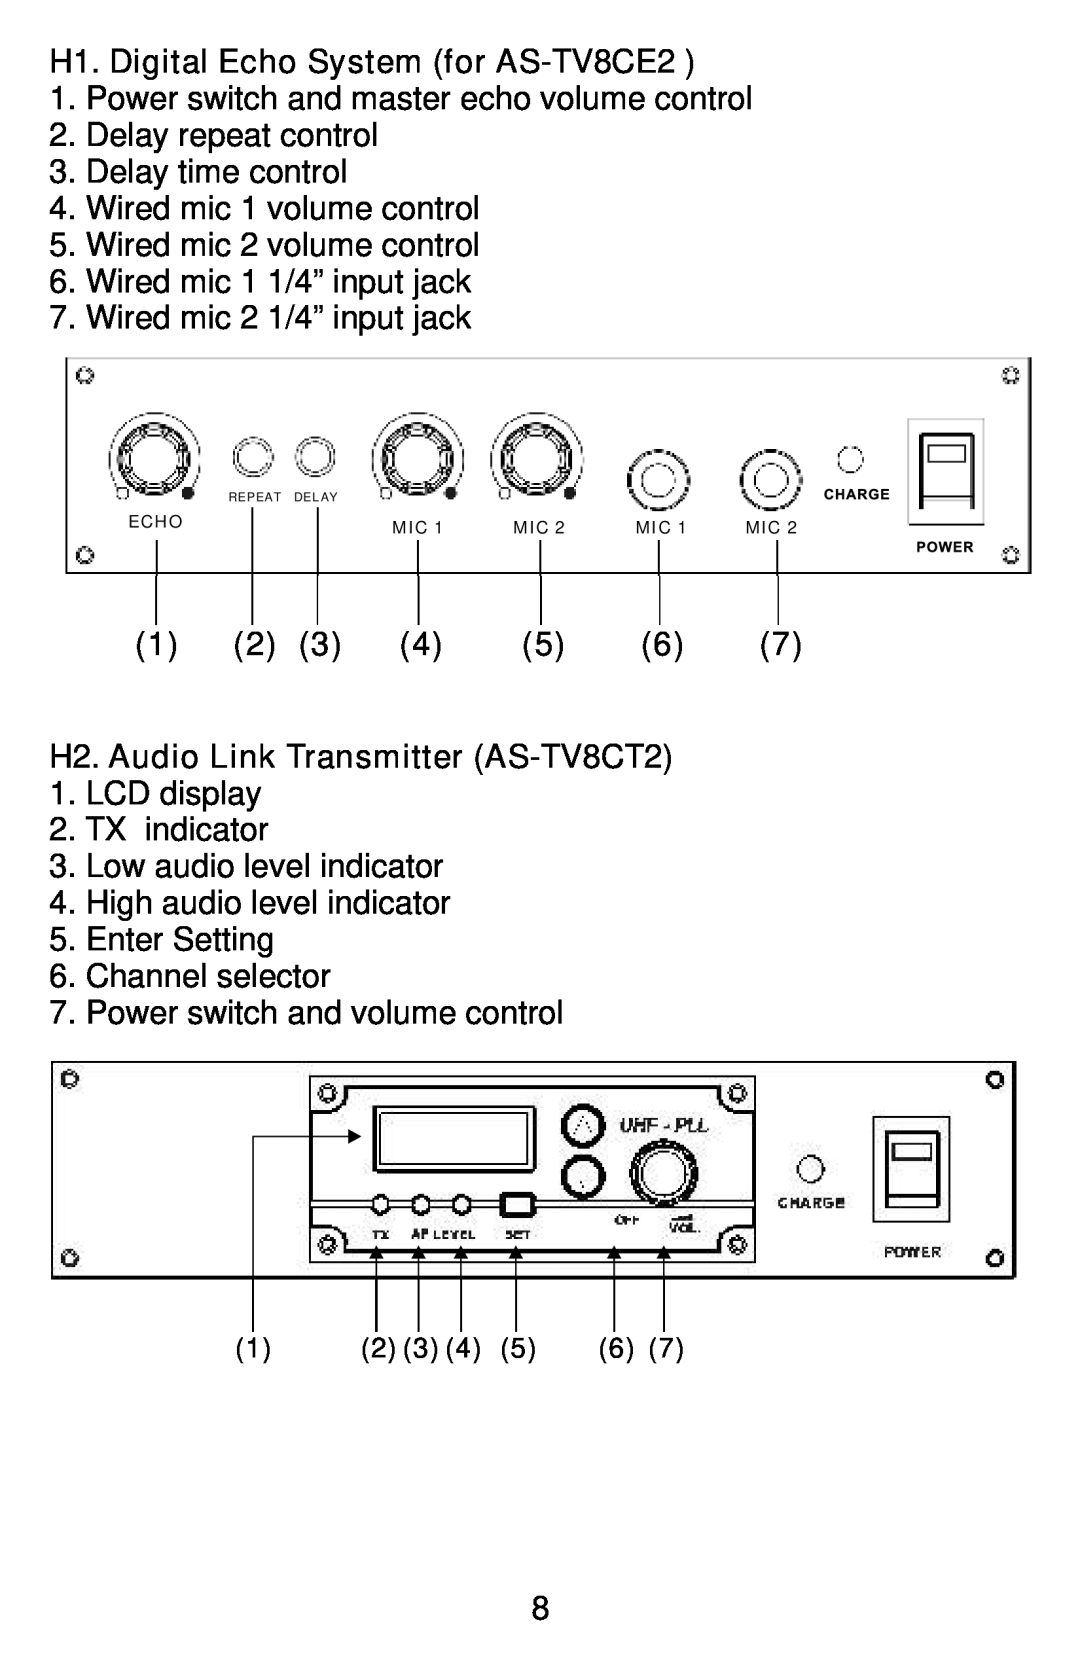 Traveler manual H1. Digital Echo System for AS-TV8CE2, H2. Audio Link Transmitter AS-TV8CT2 